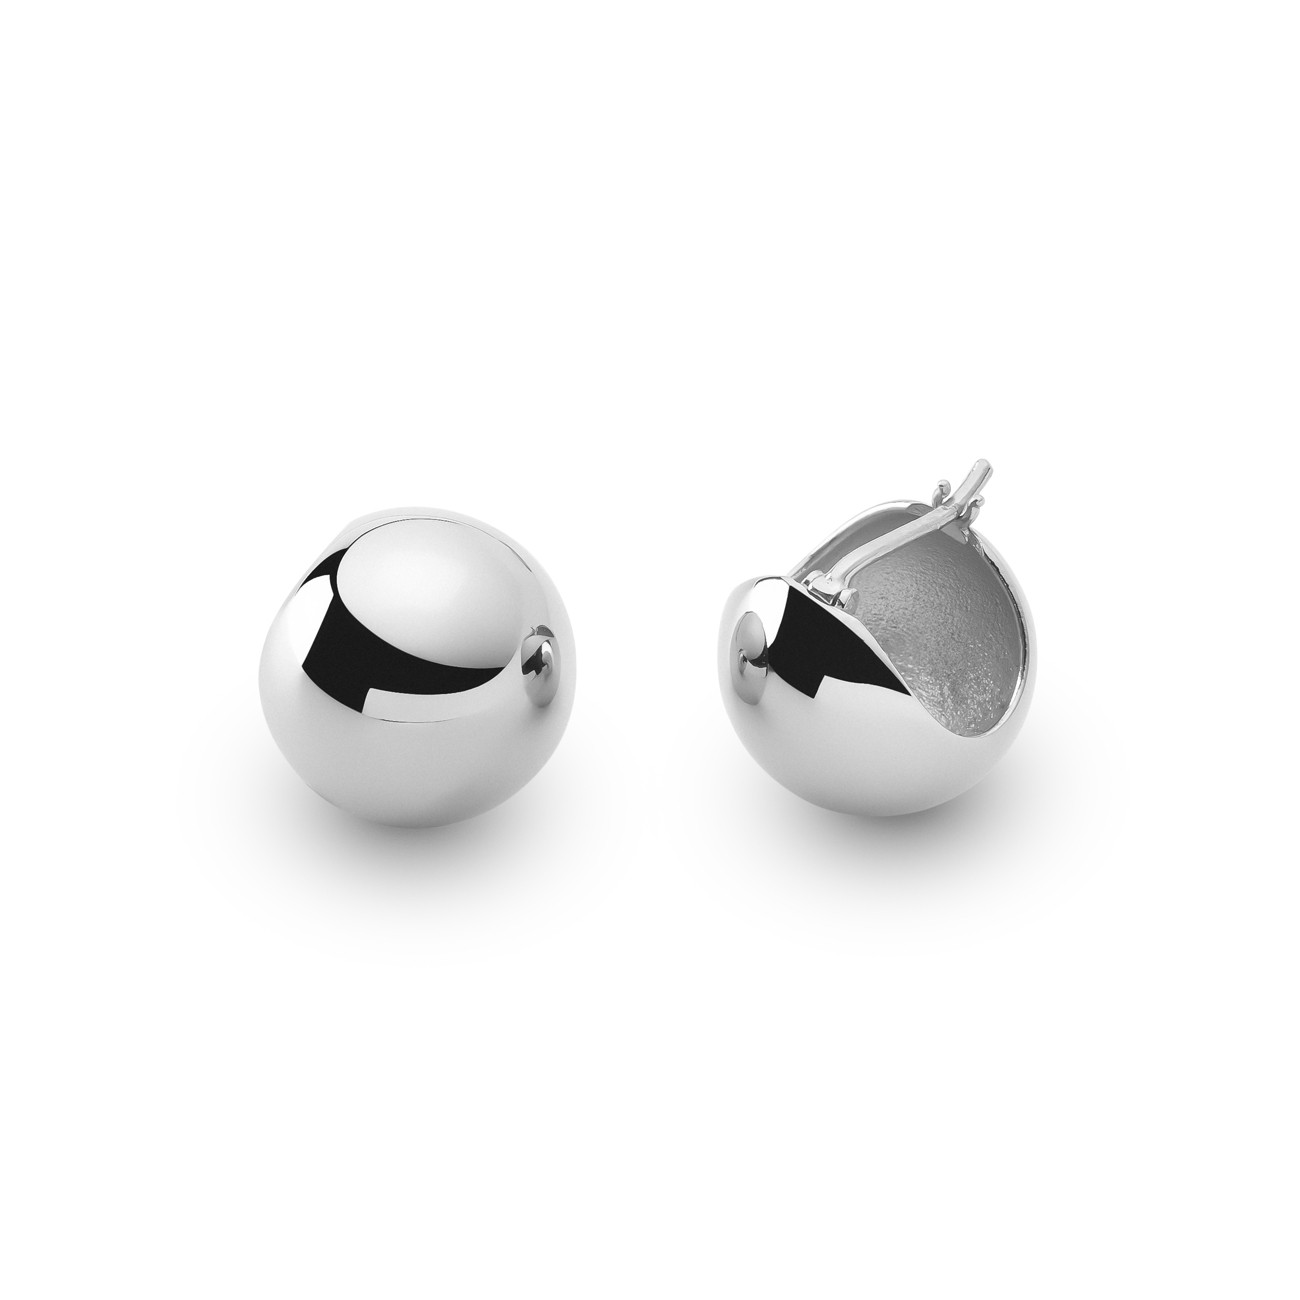 Ball earring, sterling silver 925